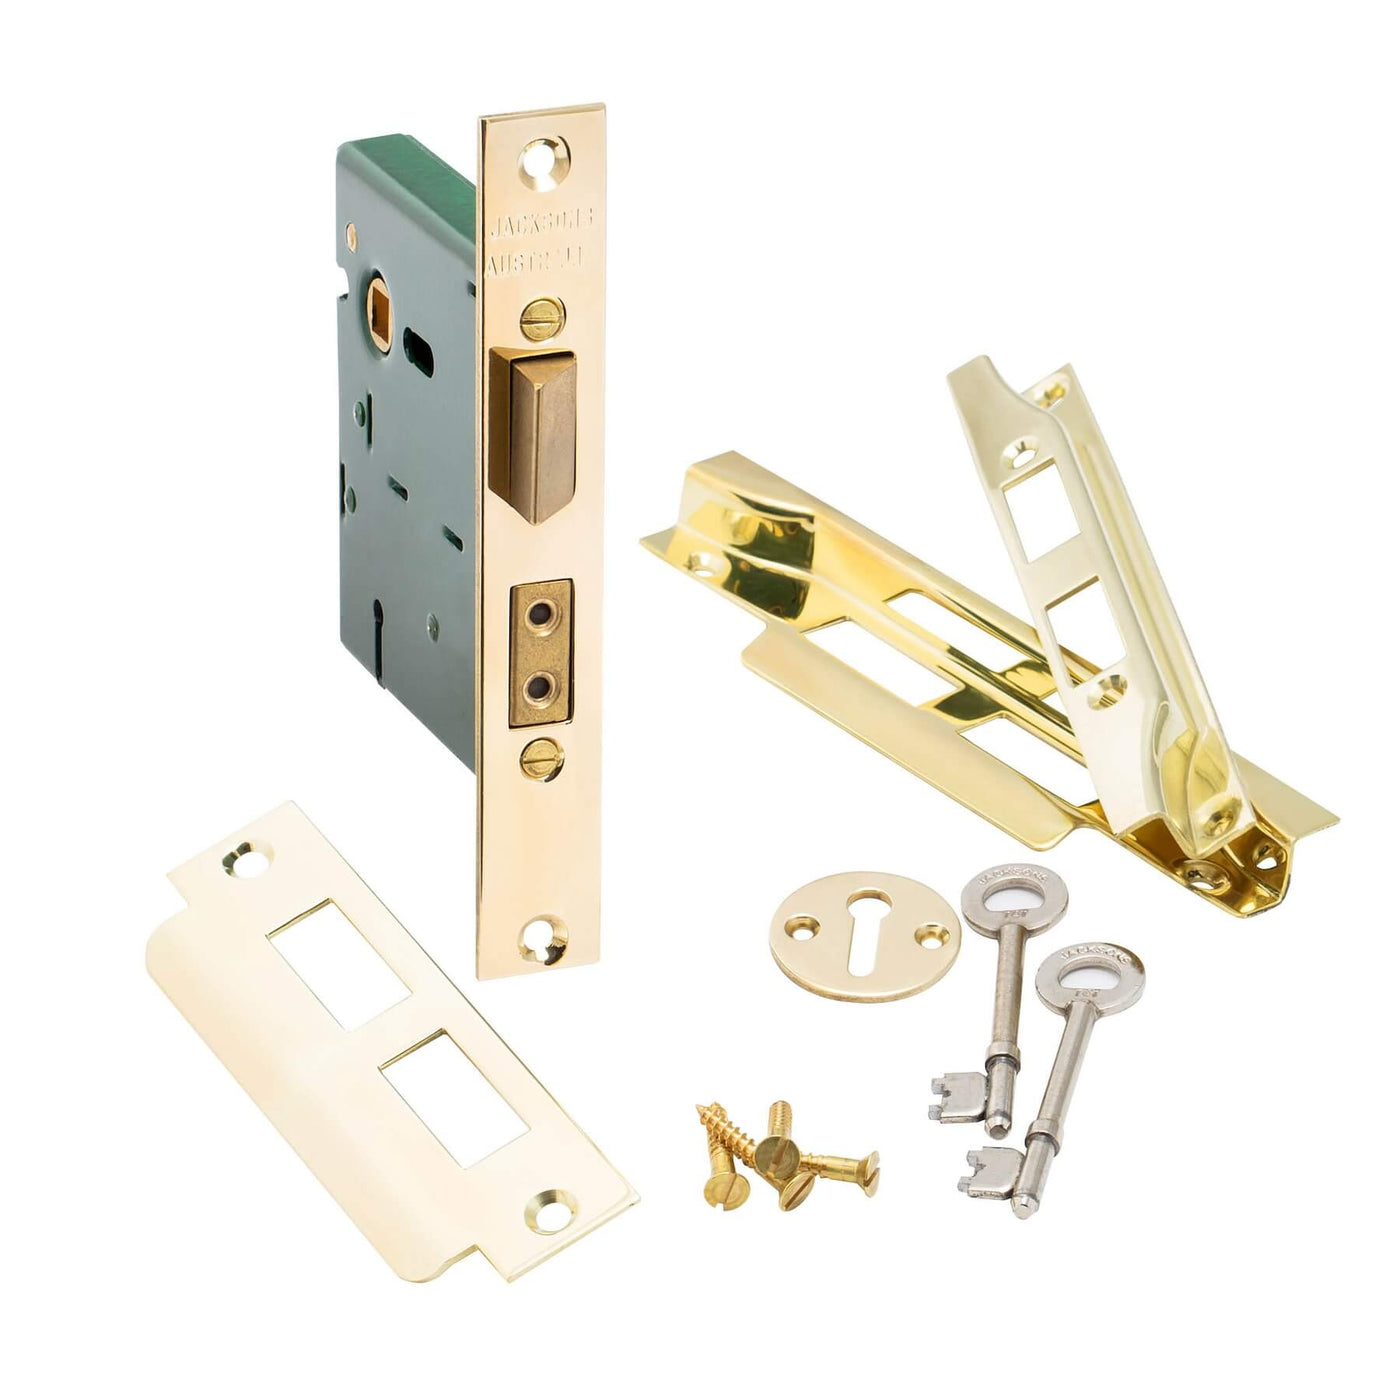 JM 5 Lever Backset Lock with Bit Keyhole Body with